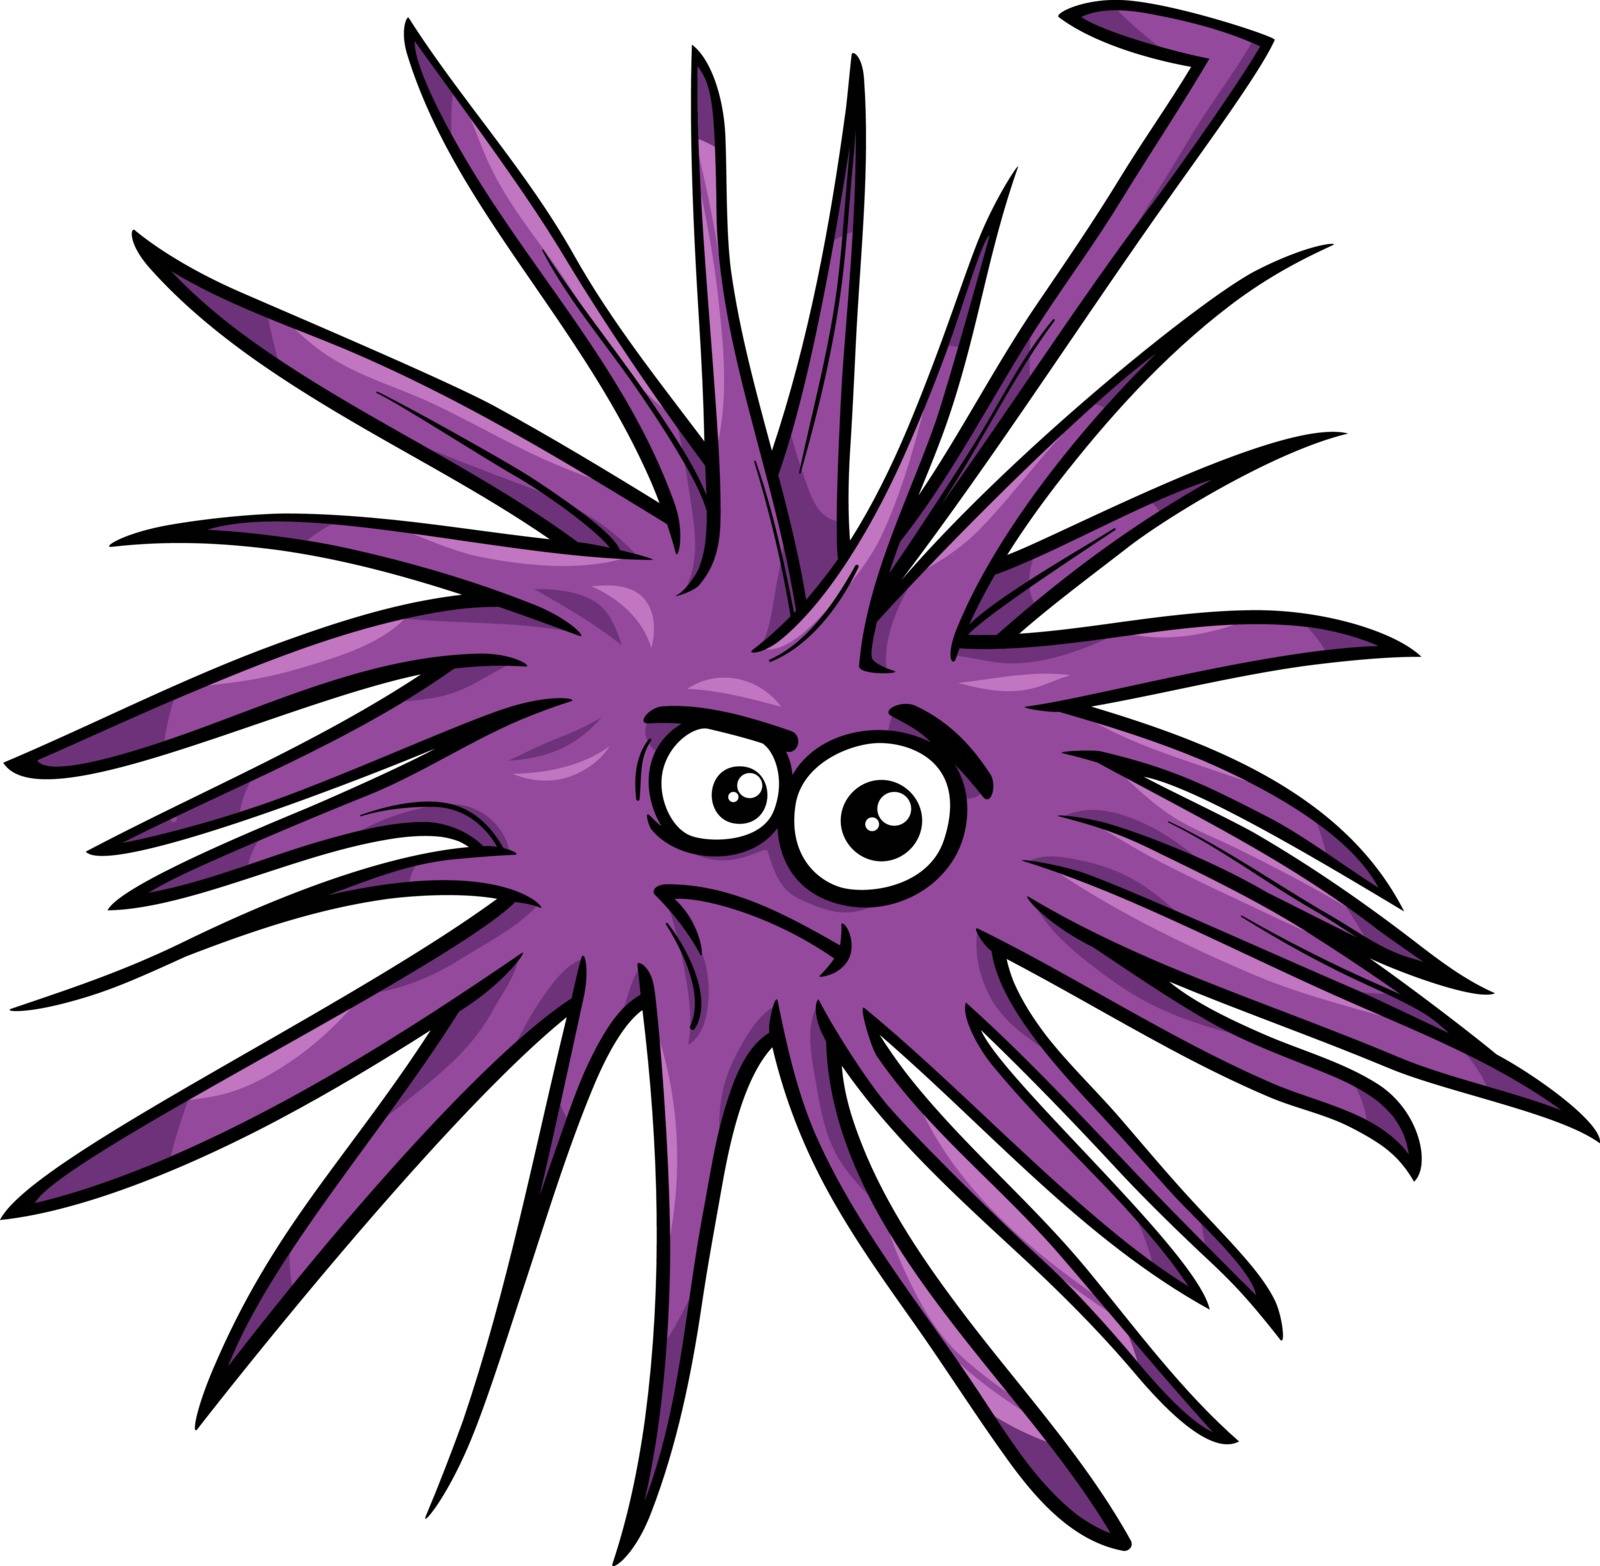 Cartoon Illustration of Funny Sea Urchin Marine Animal